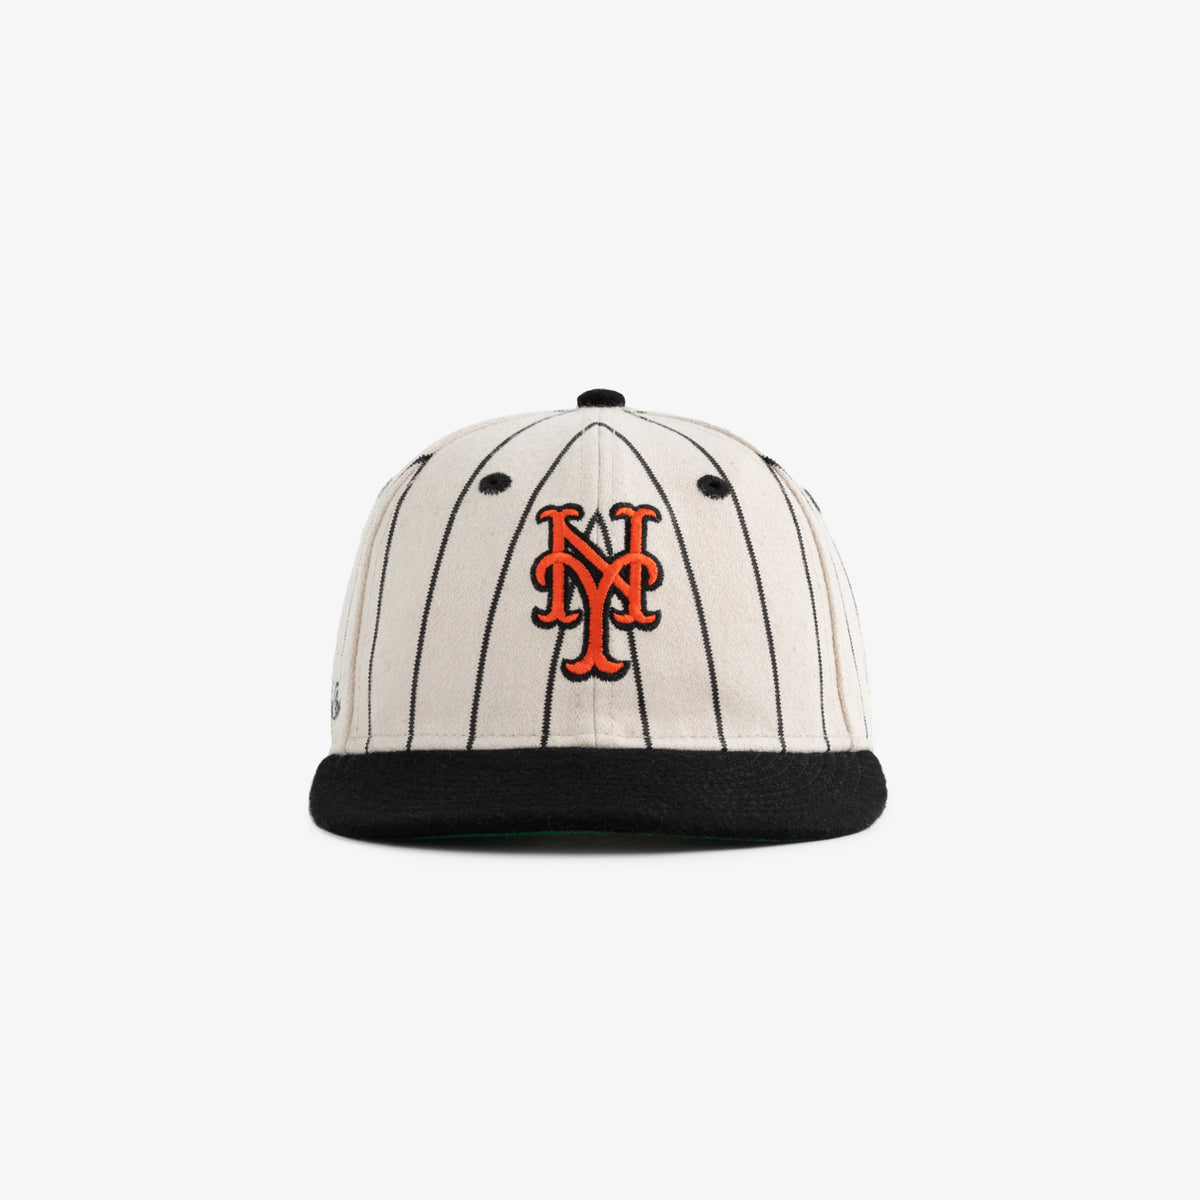 ALD / New Era Wool Mets Hat at AimeLeonDore.com